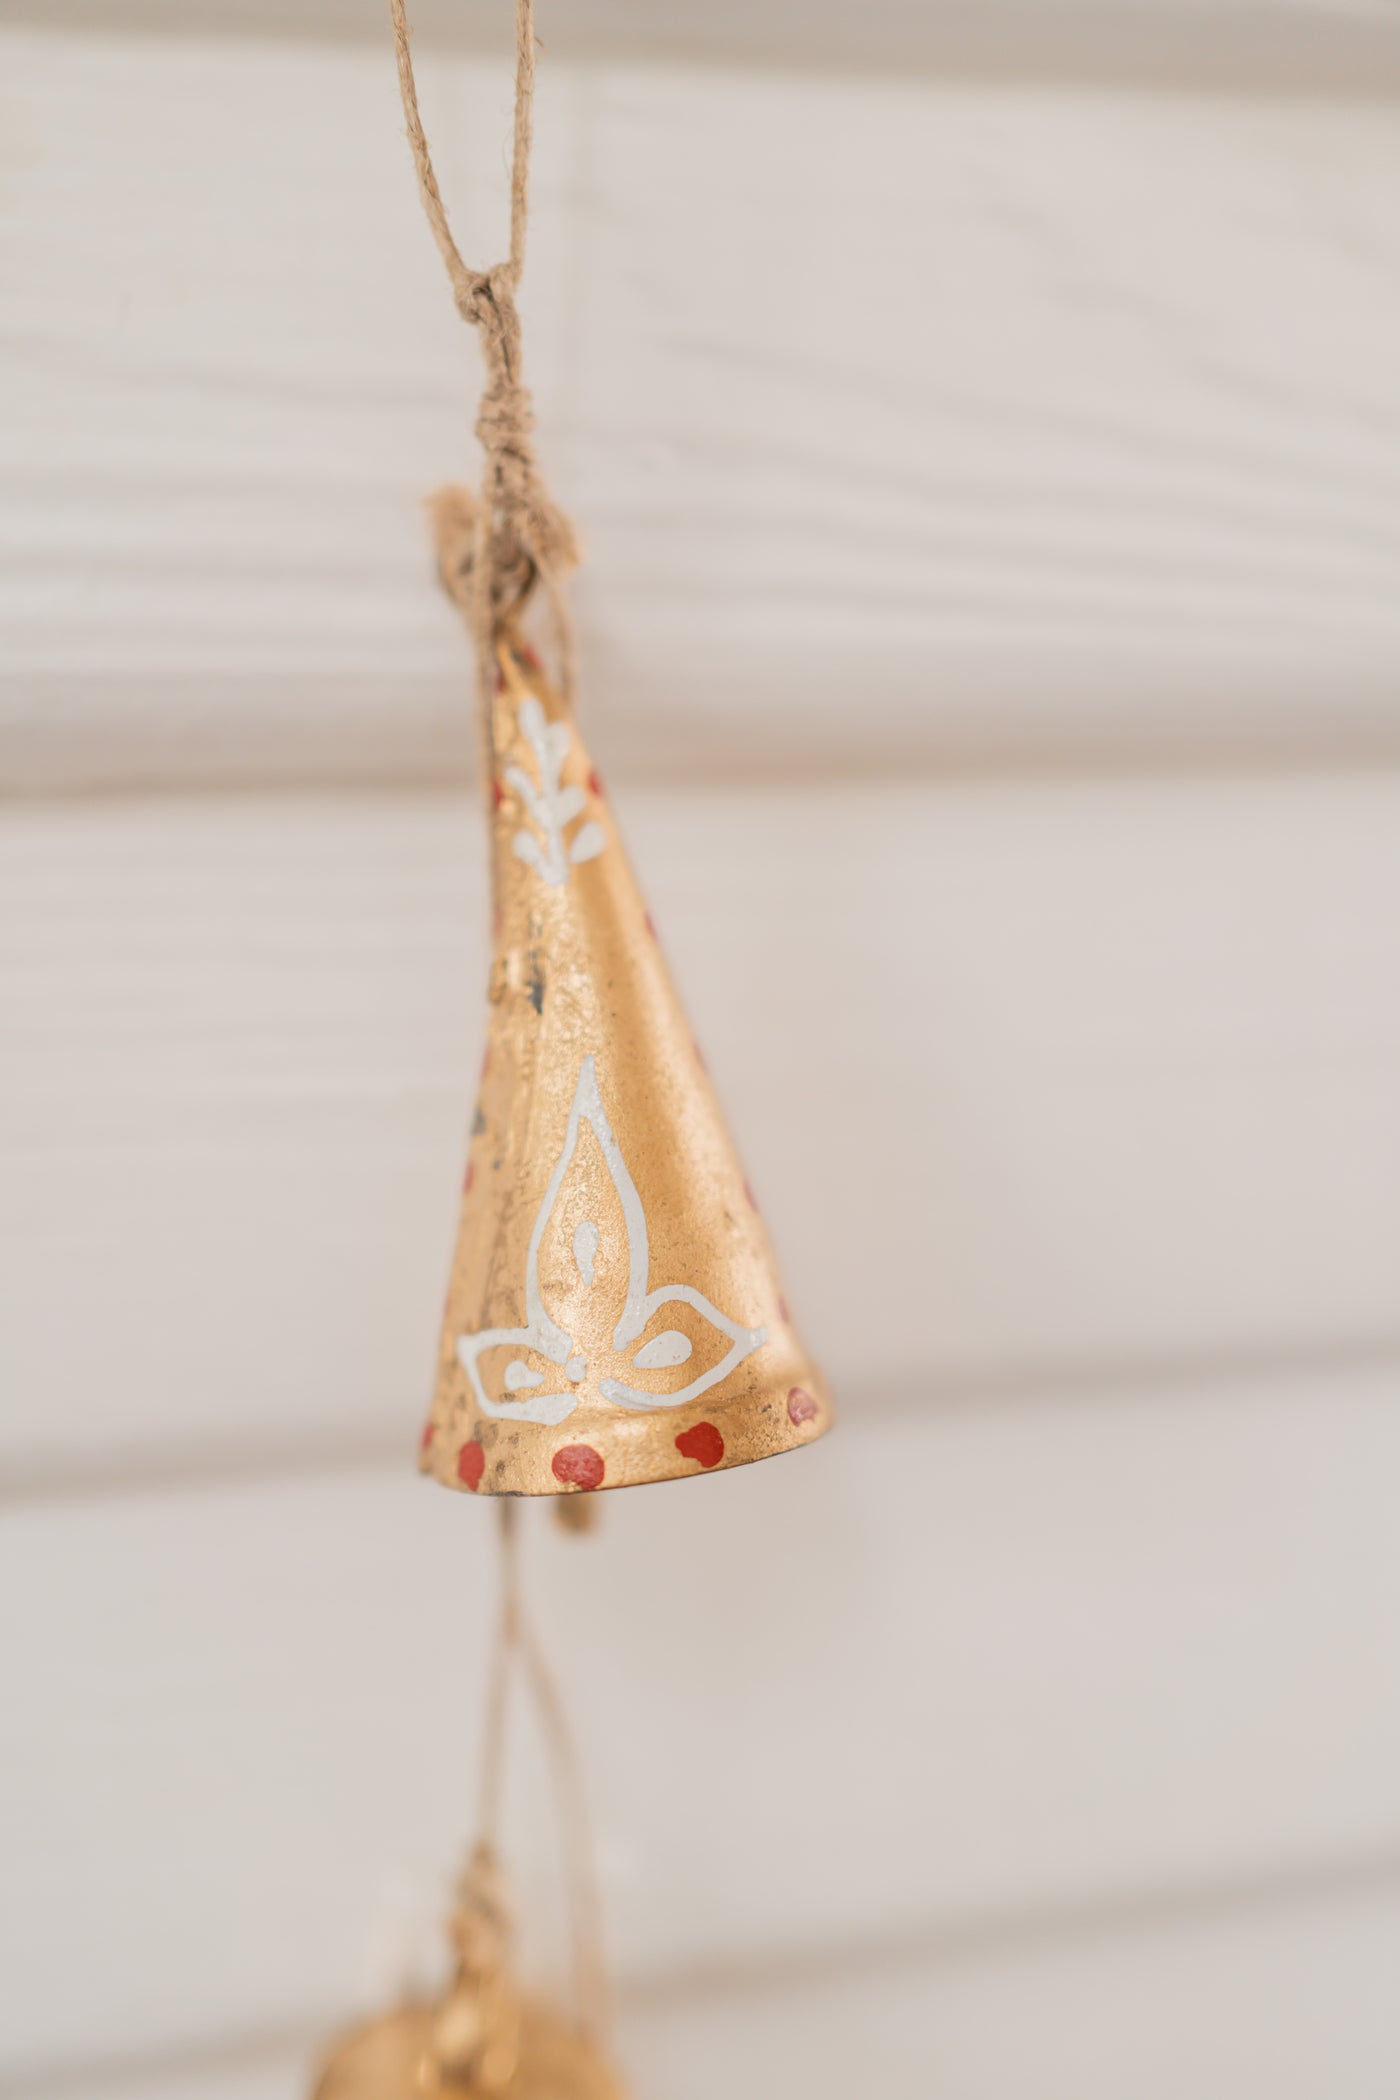 Hanging Metal Bells - Hand-Painted Design